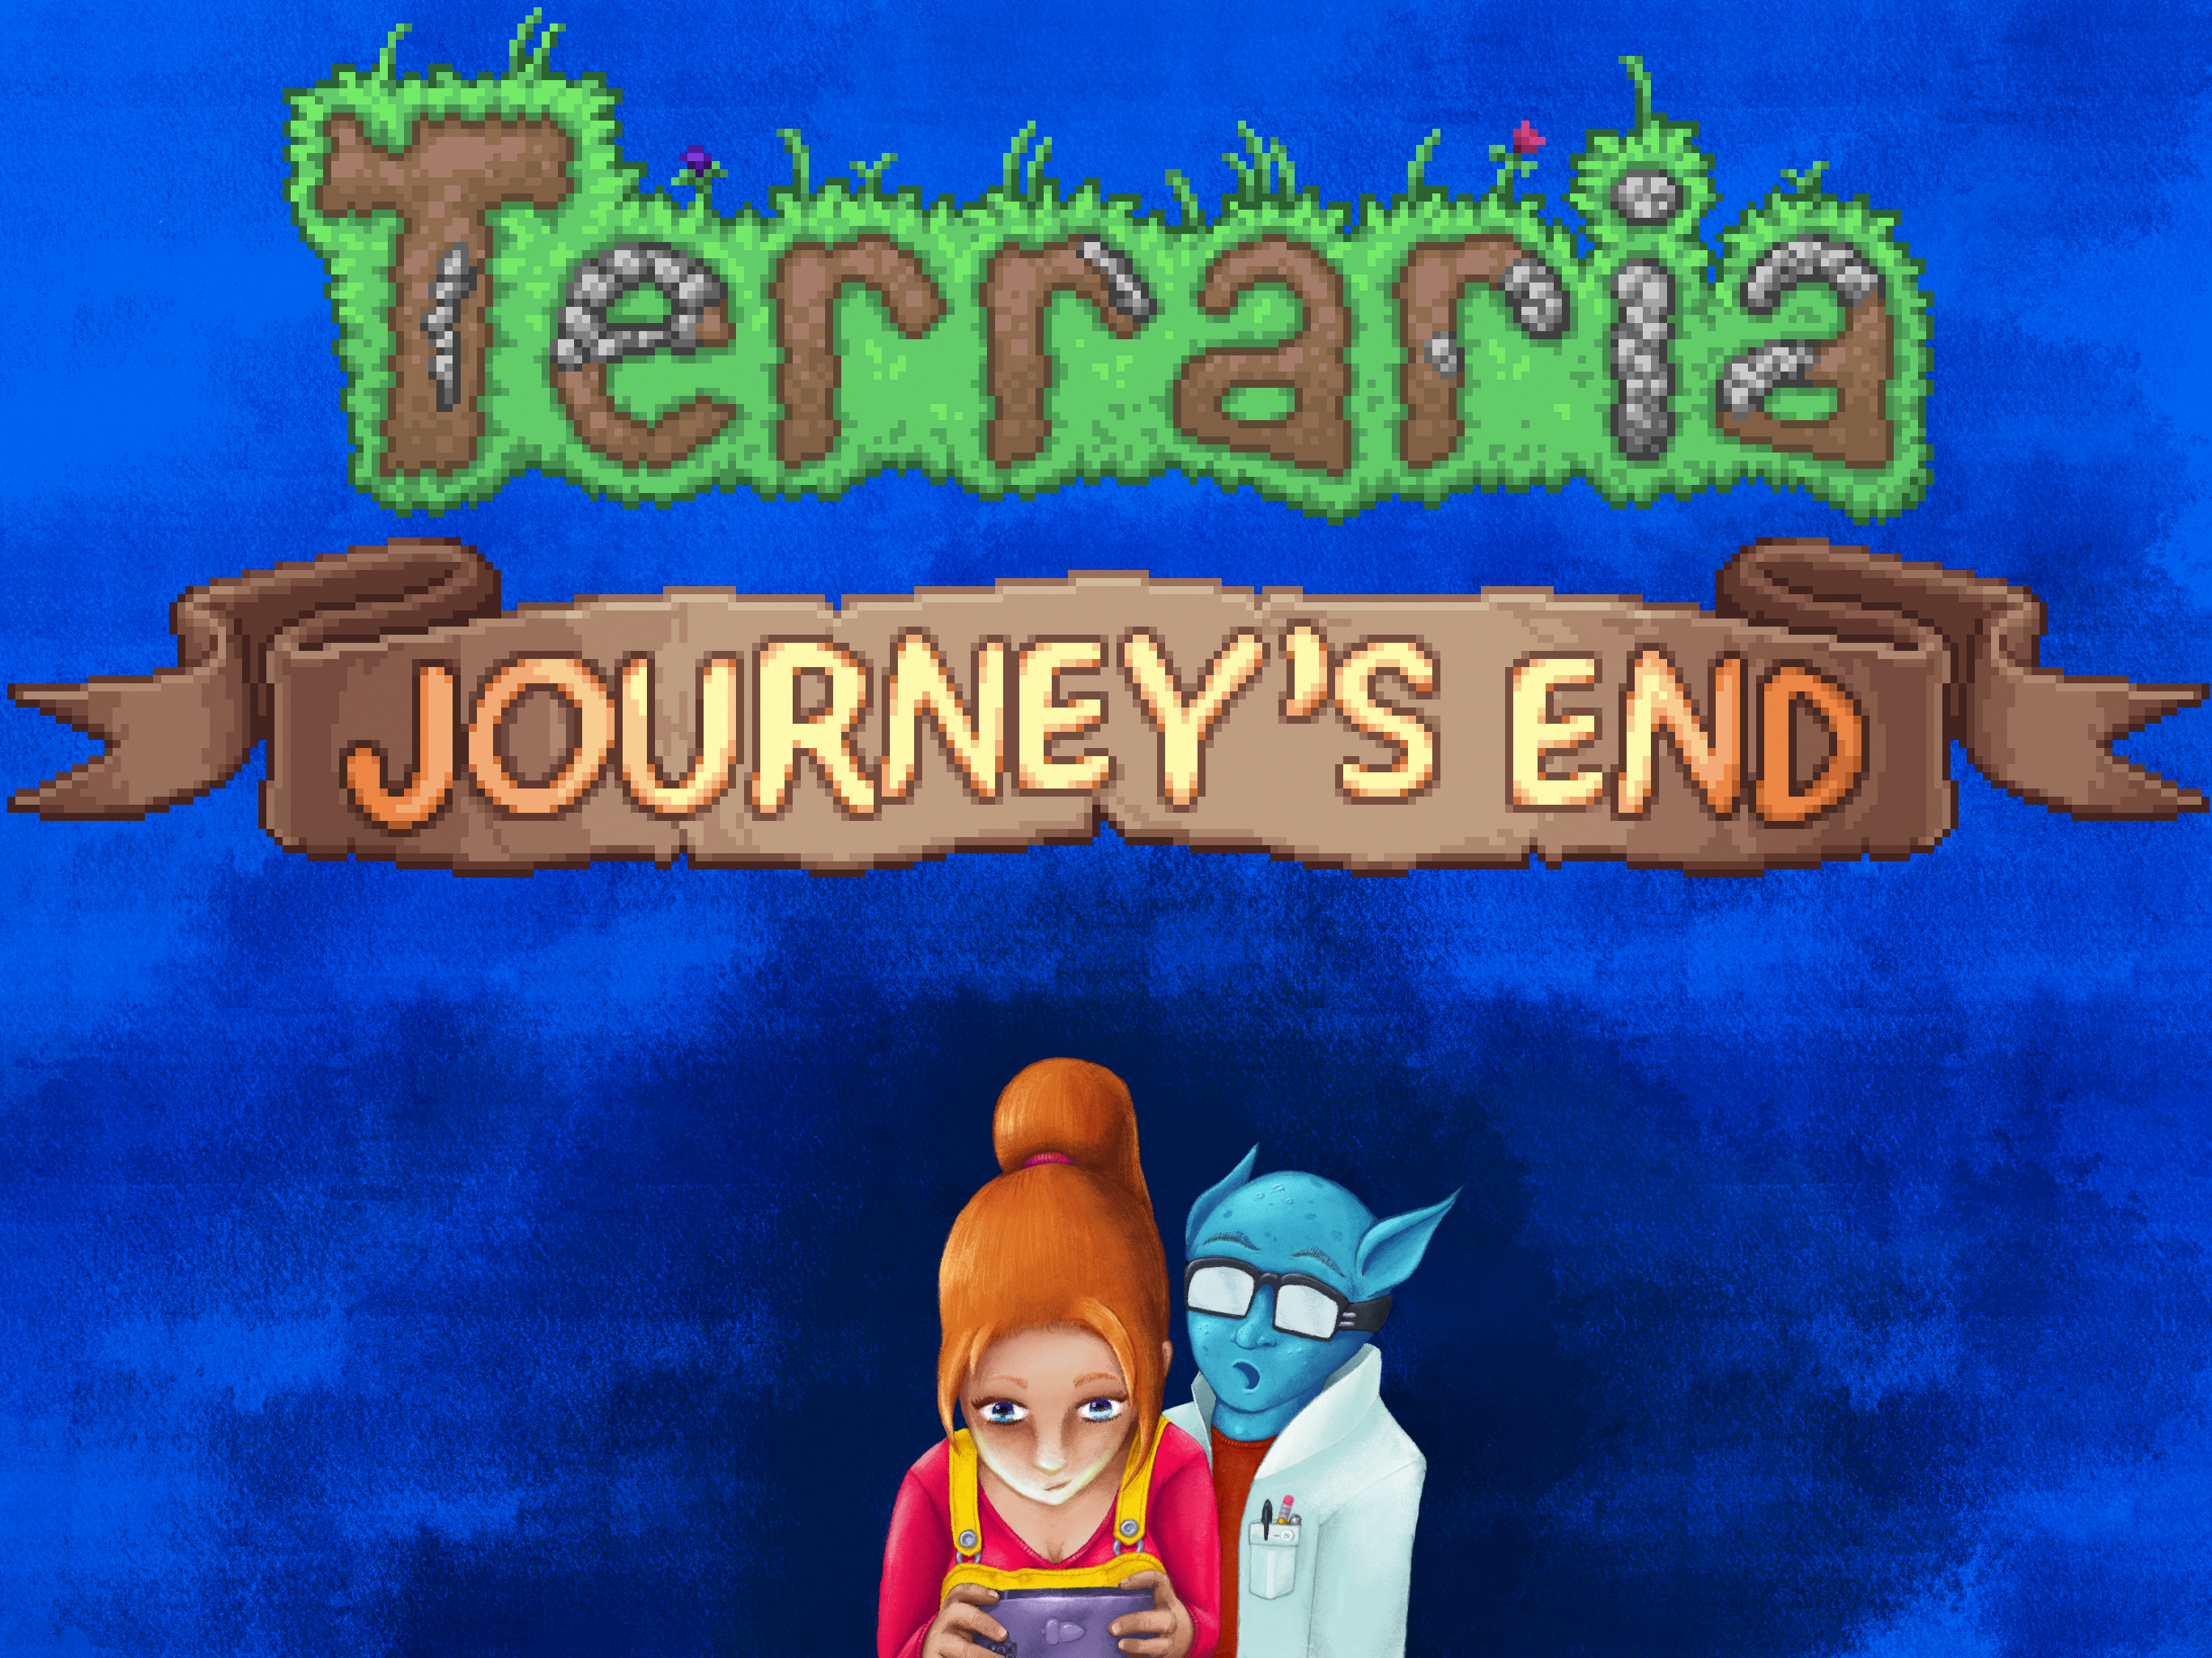 terraria 1.4.2 full version frees